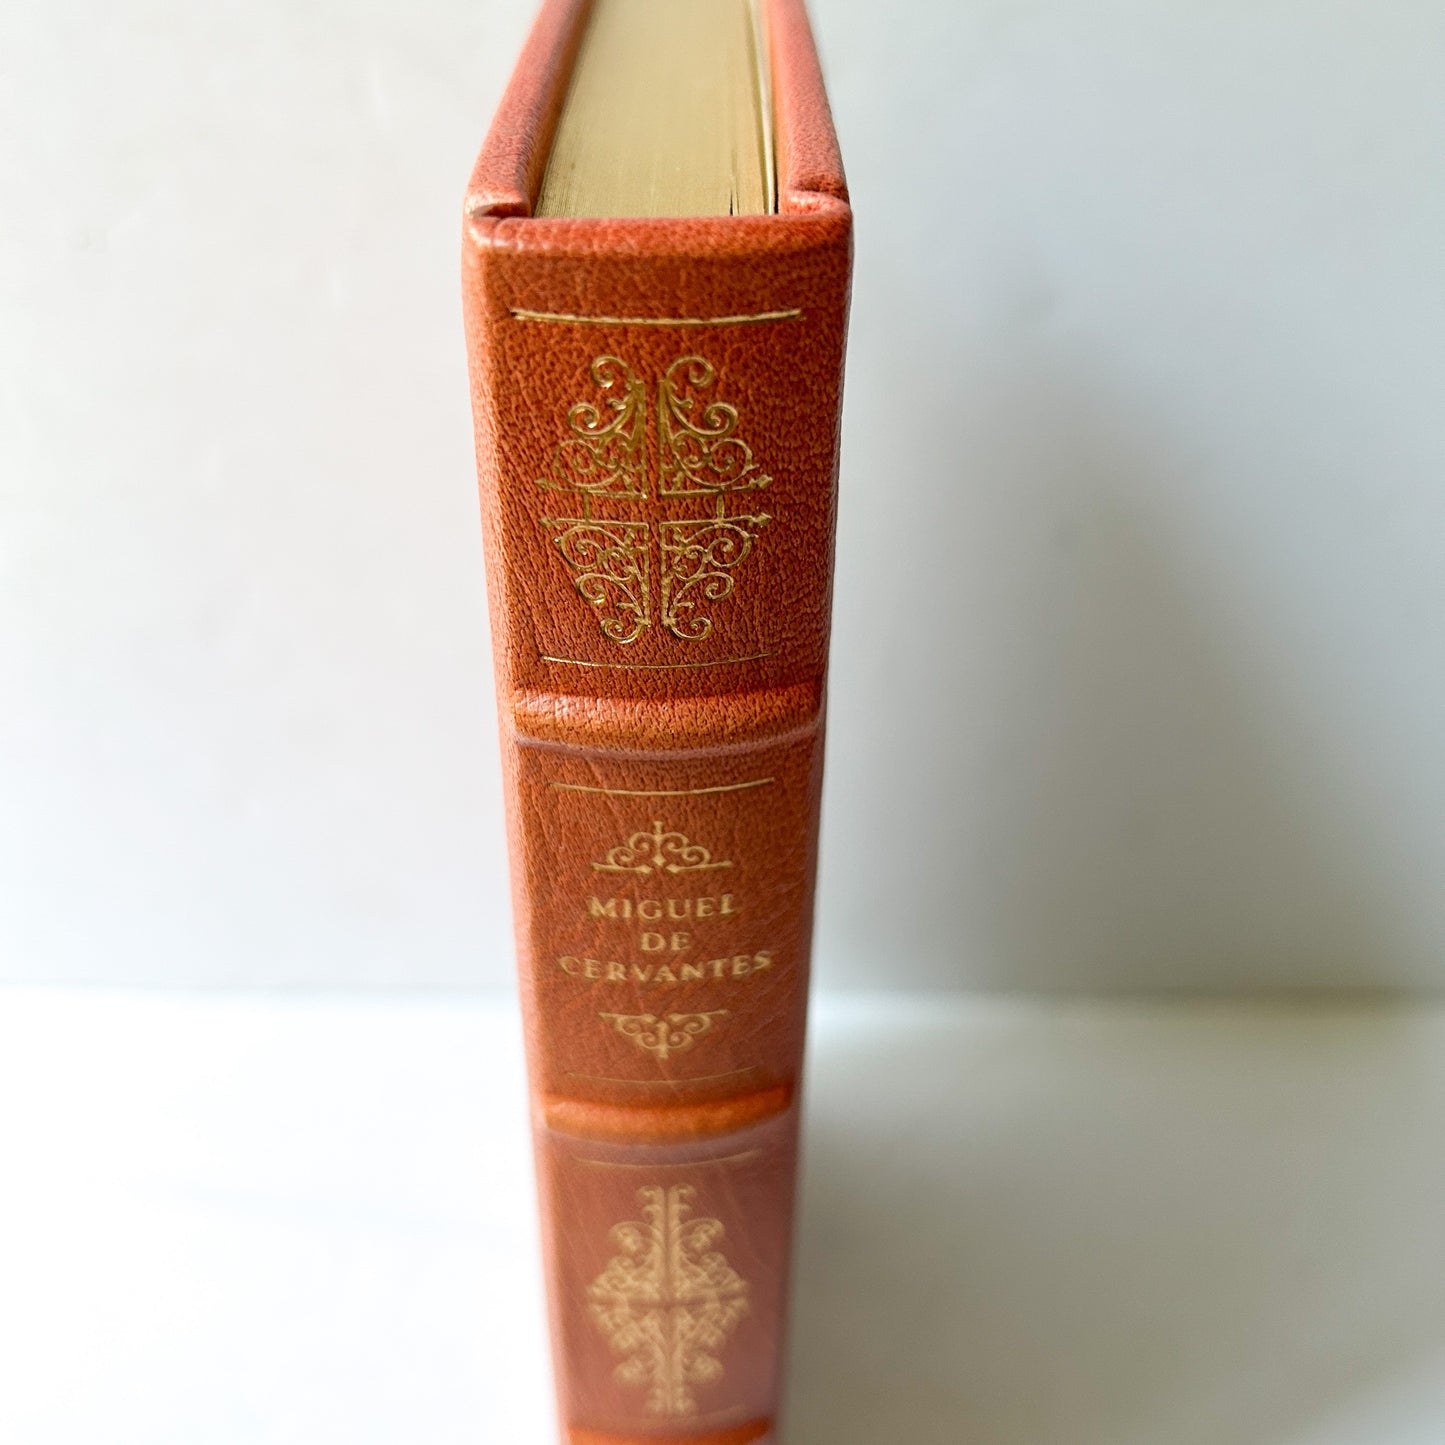 Miguel De Cervantes, Three Exemplary Novels, Vintage Franklin Library Book